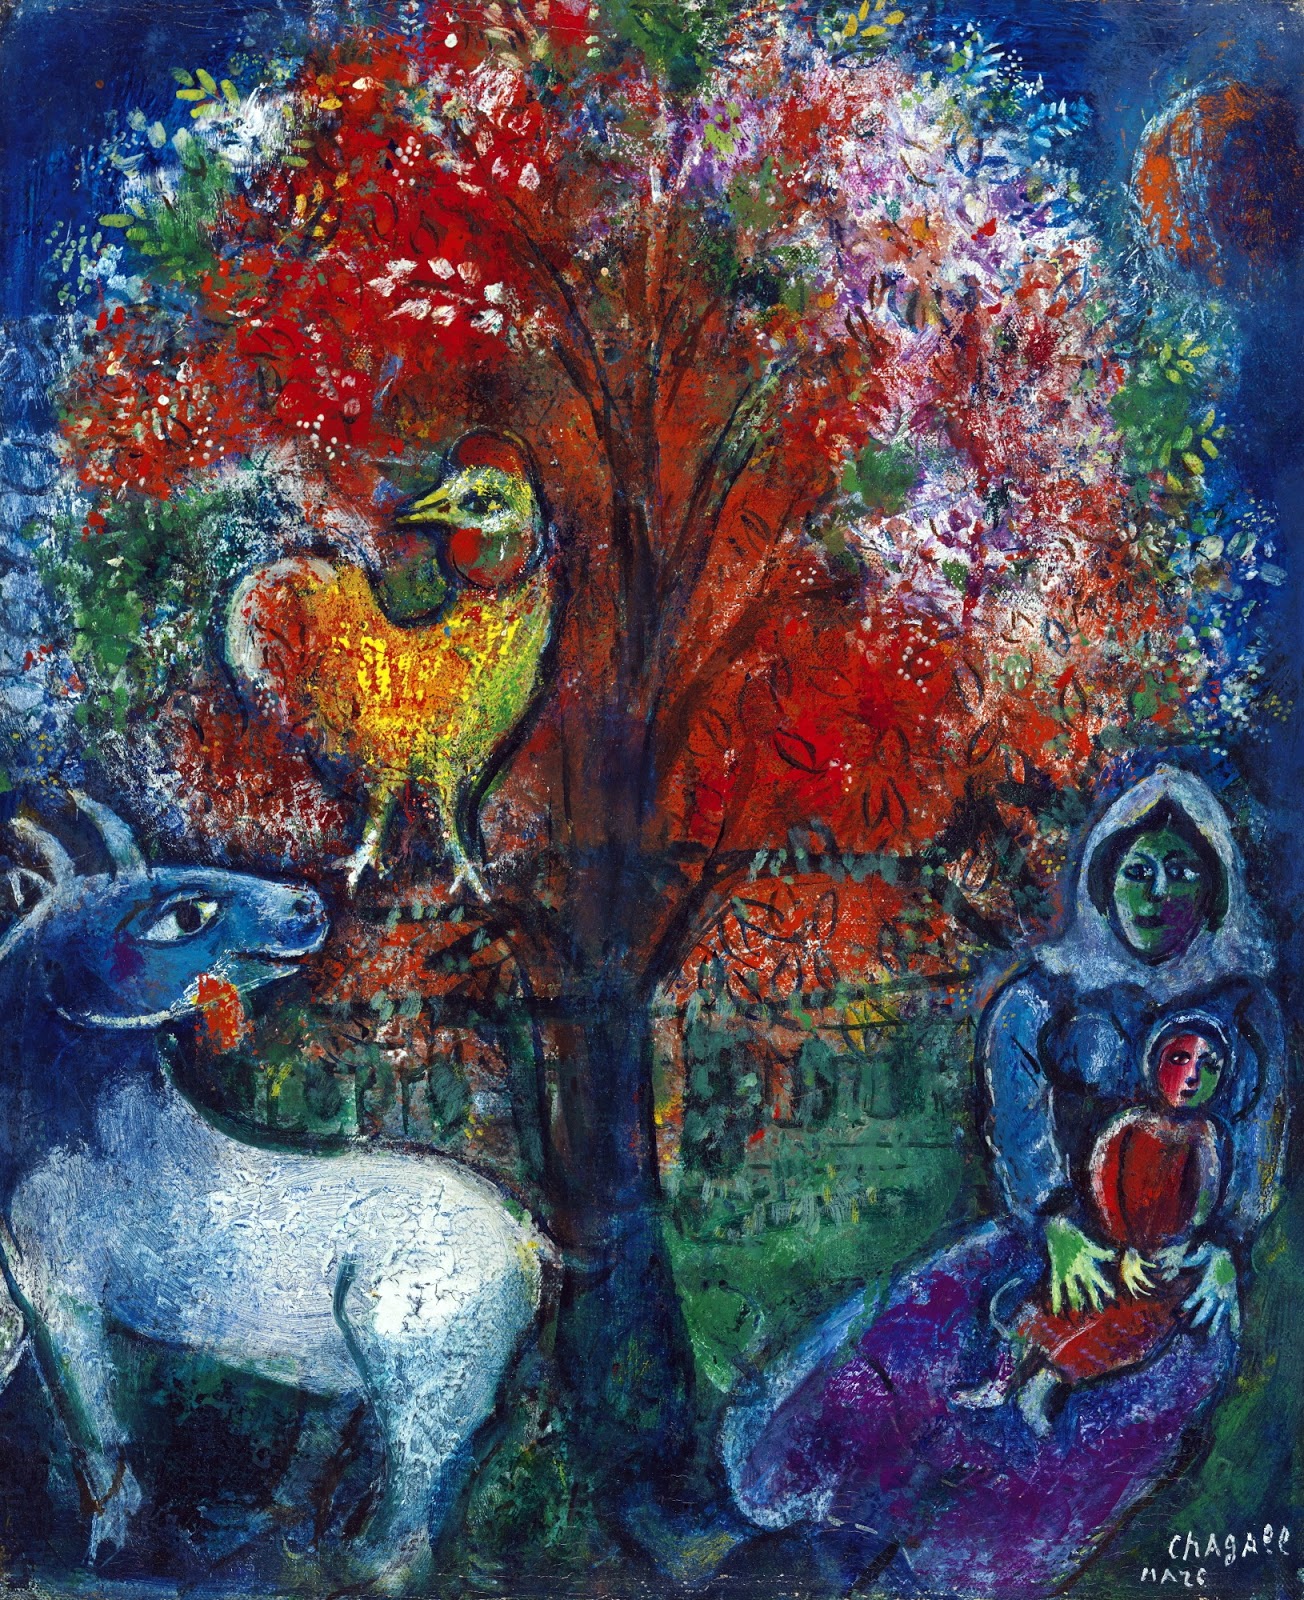 Marc+Chagall-1887-1985 (289).jpg